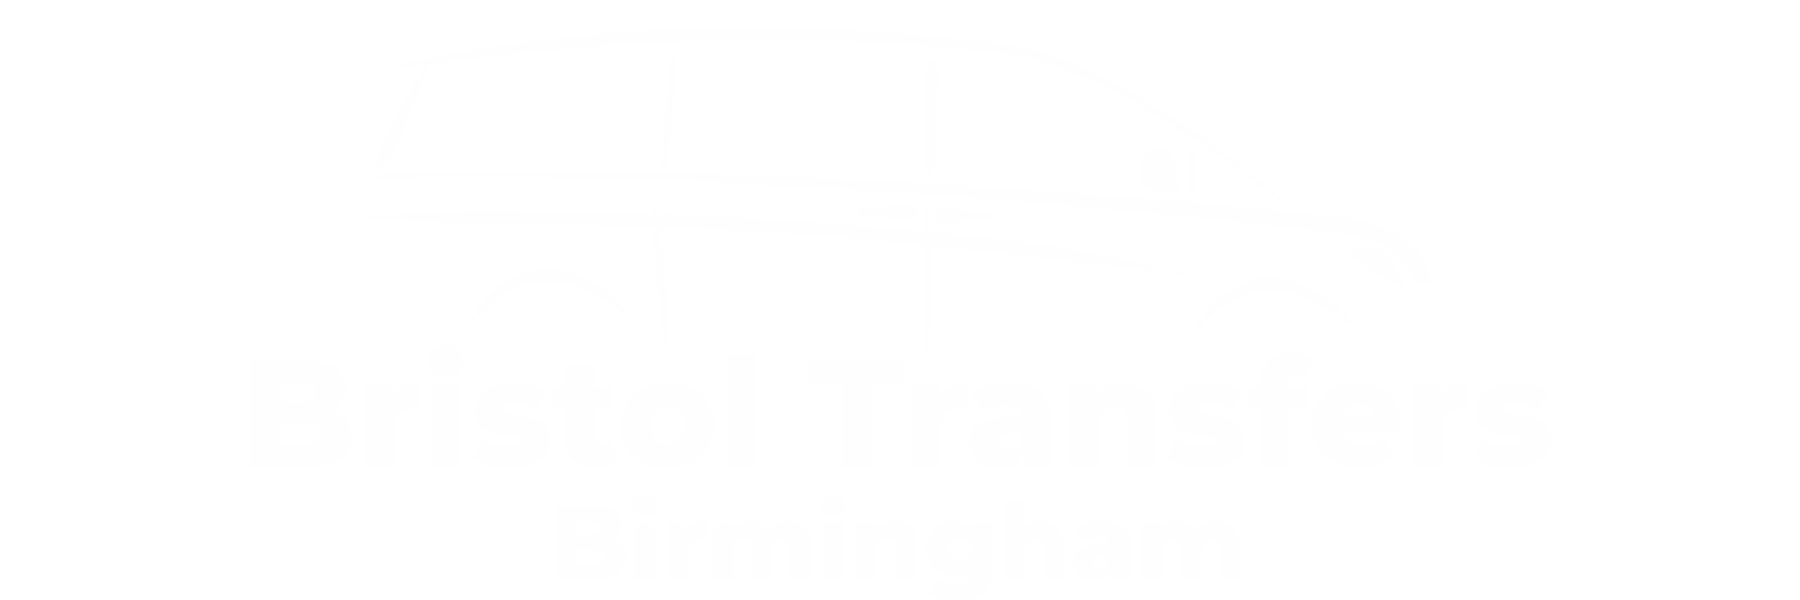 Birmingham to Bristol transfers